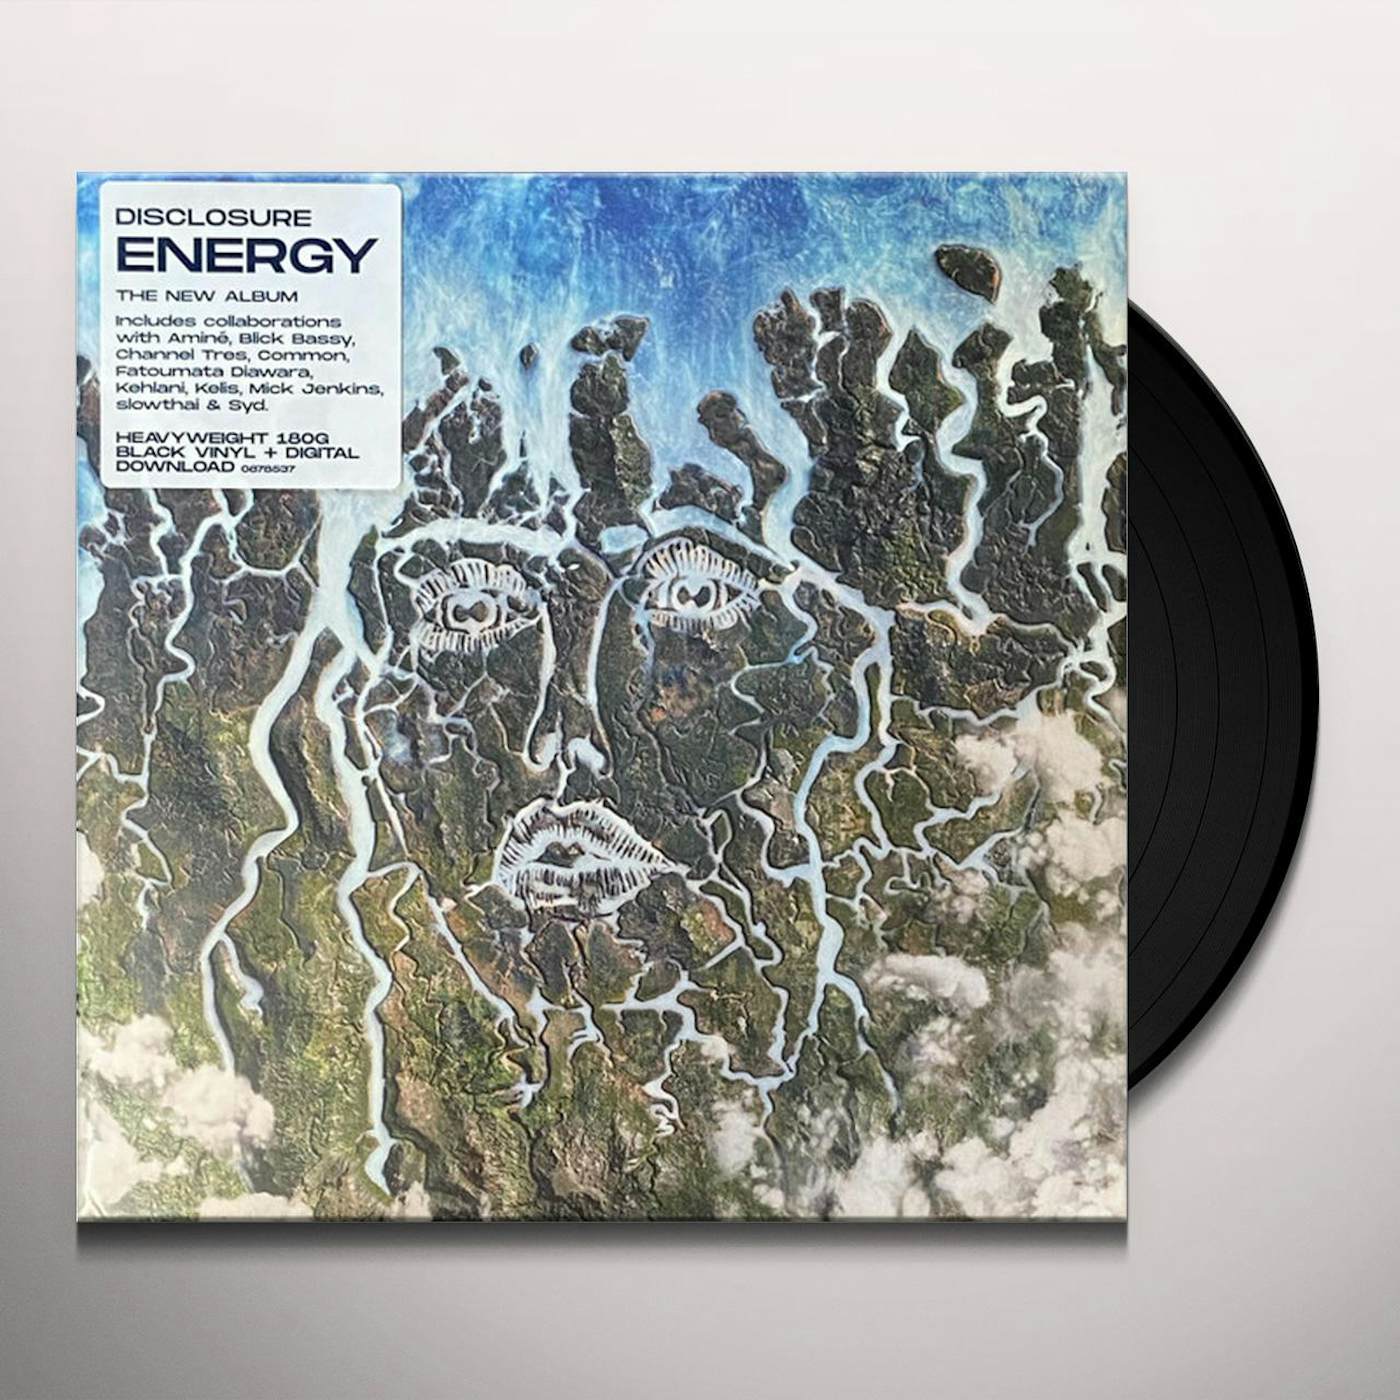 Disclosure ENERGY Vinyl Record